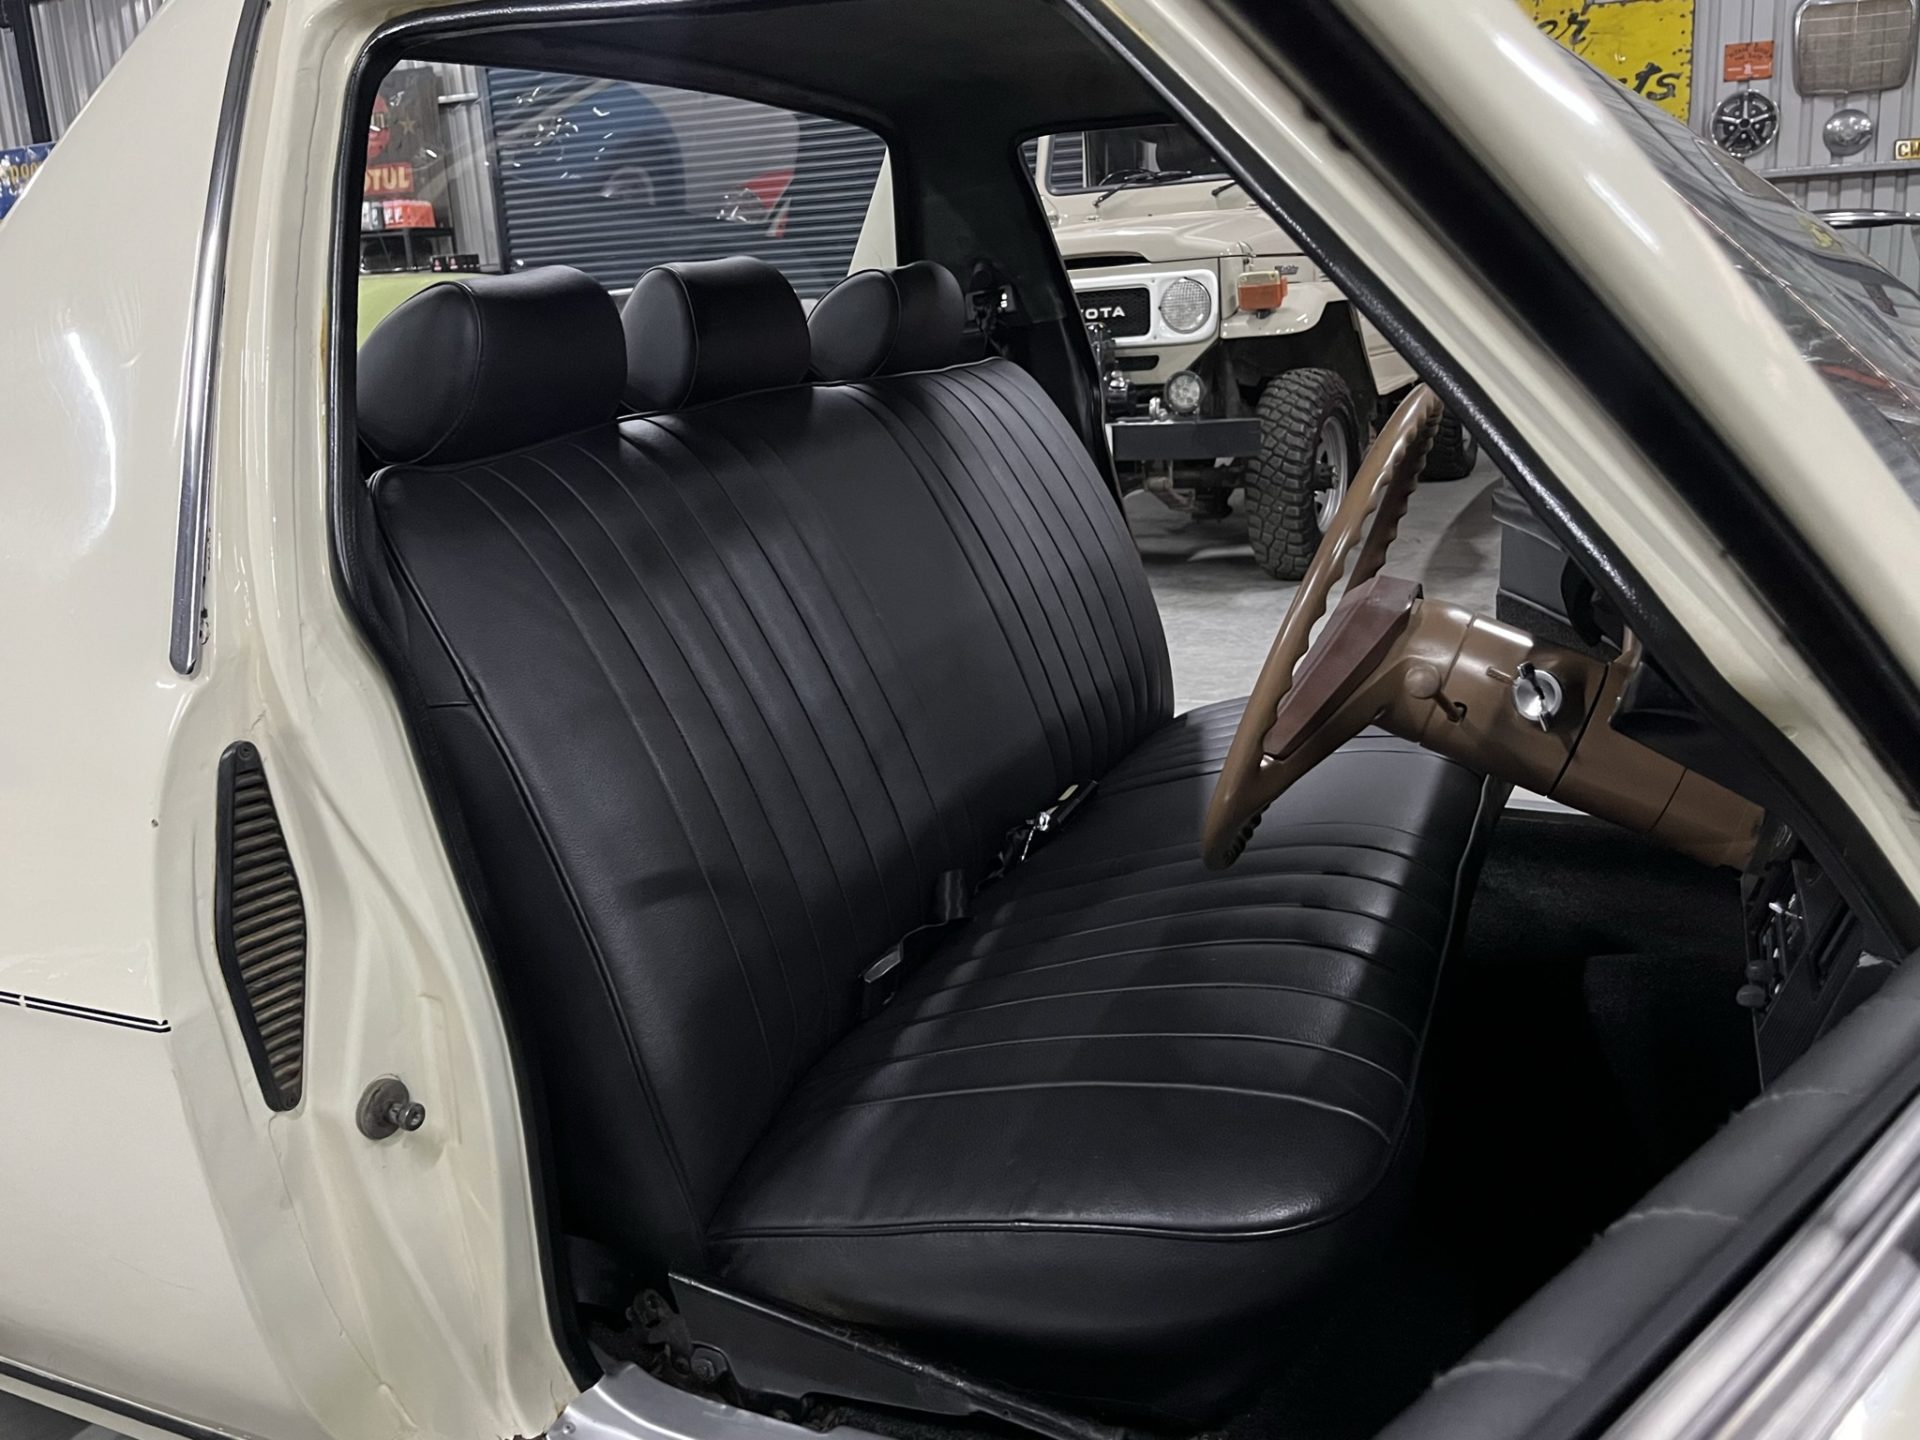 1973 Chevrolet Elcamino V8 Auto